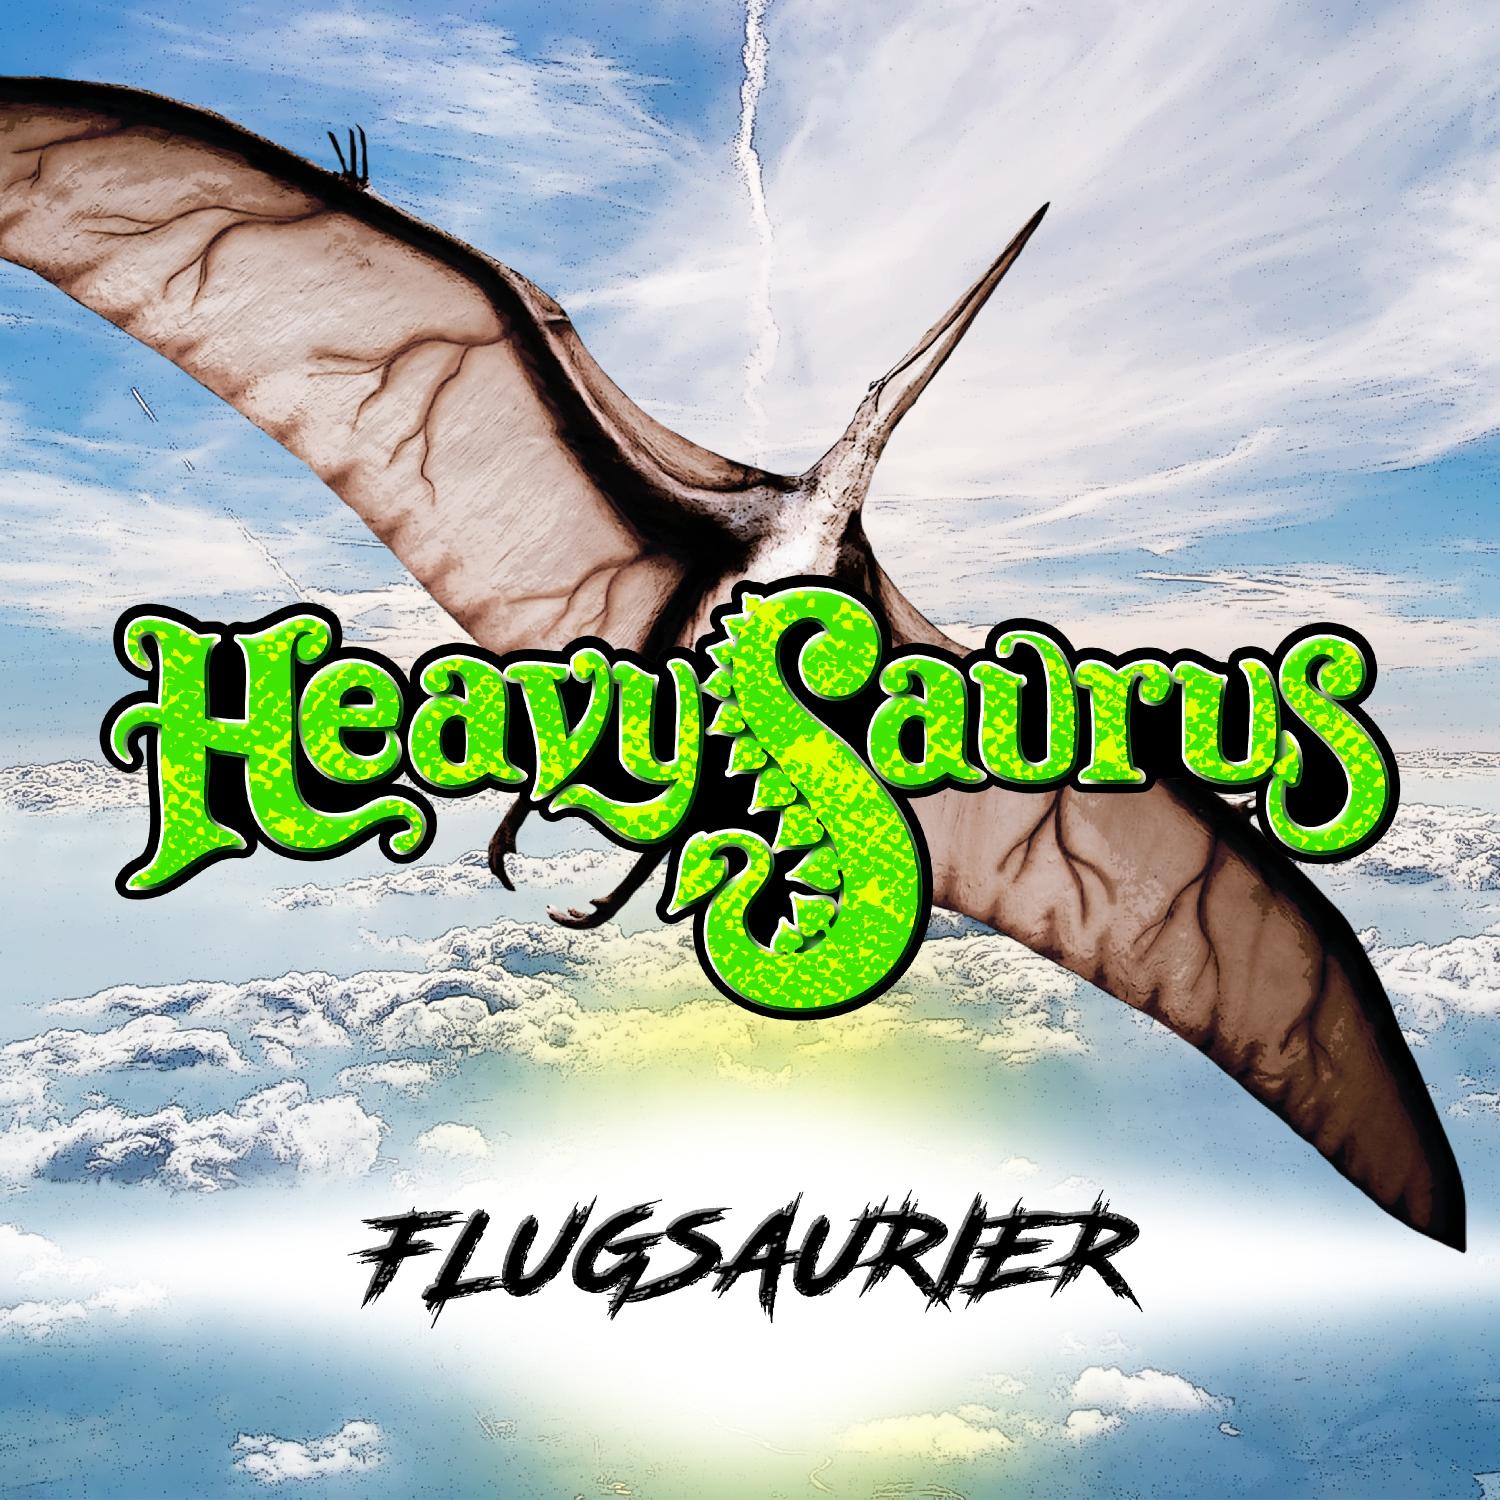 Heavysaurus - Flugsaurier